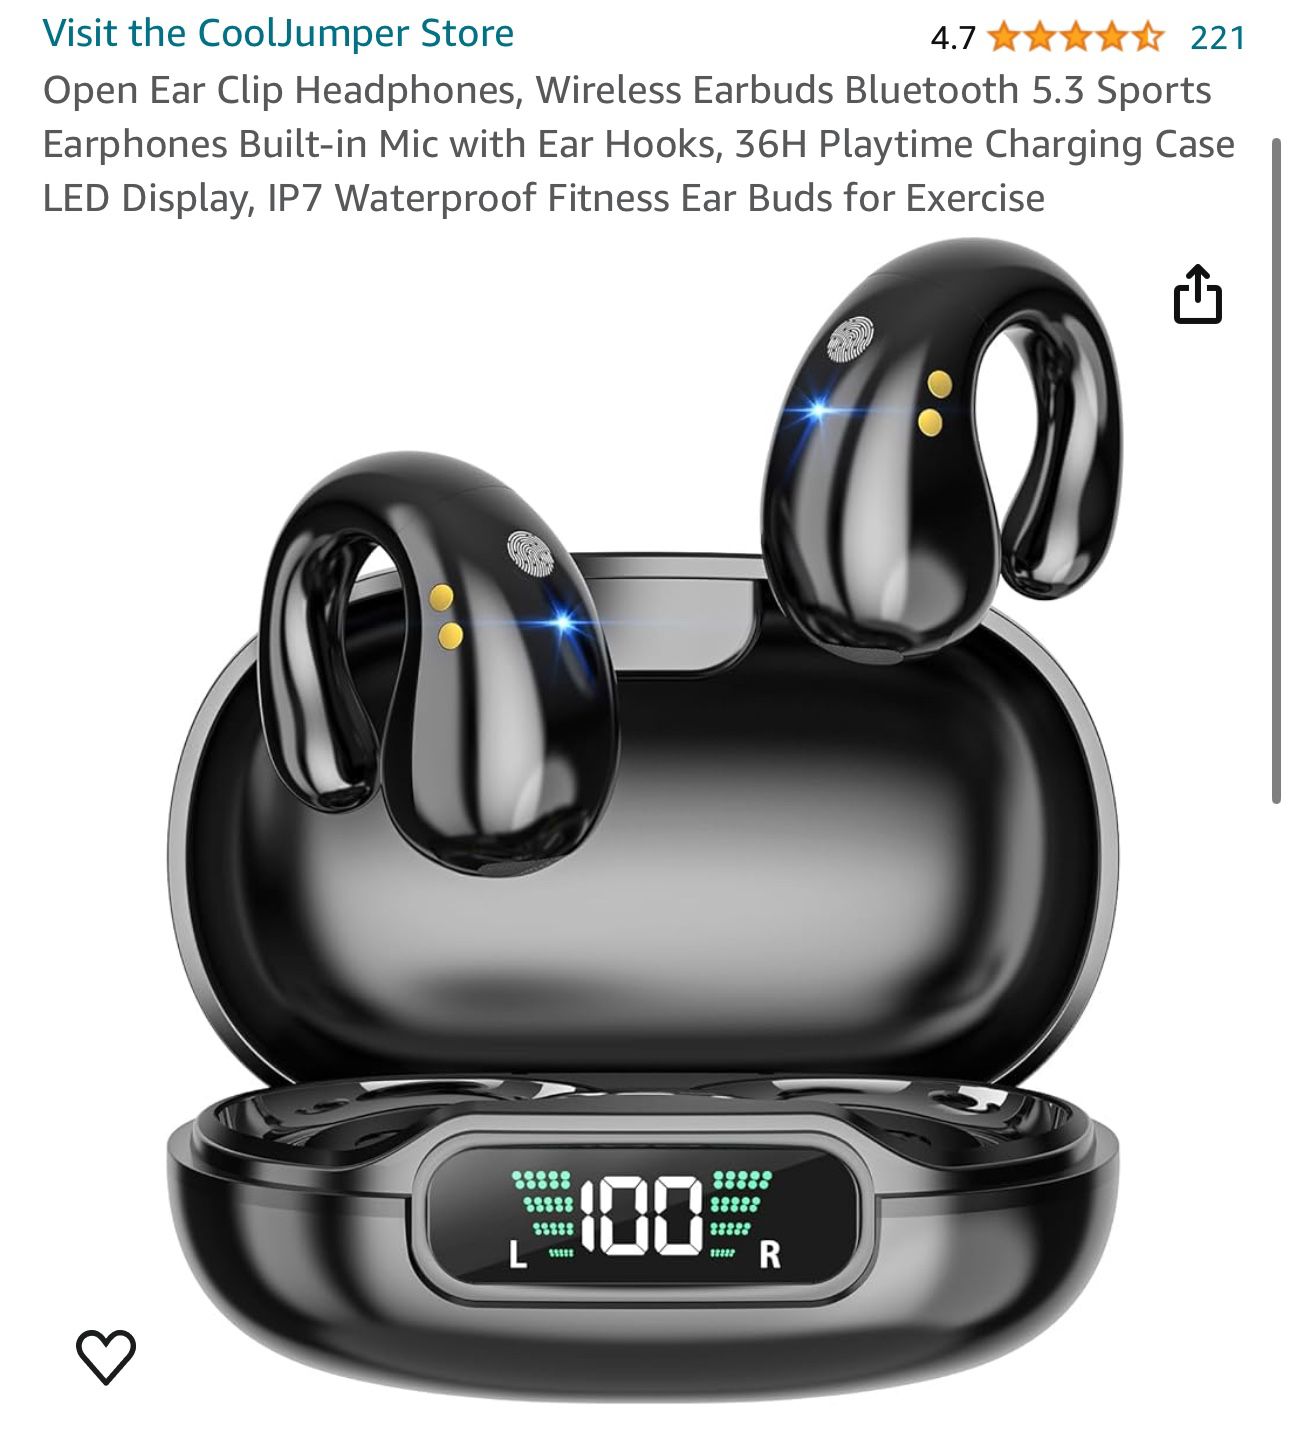 Open Ear Clip Headphones, Wireless Earbuds Bluetooth 5.3 Sports Earphones Built-in Mic with Ear Hooks, 36H Playtime Charging Case LED Display, IP7 Wat